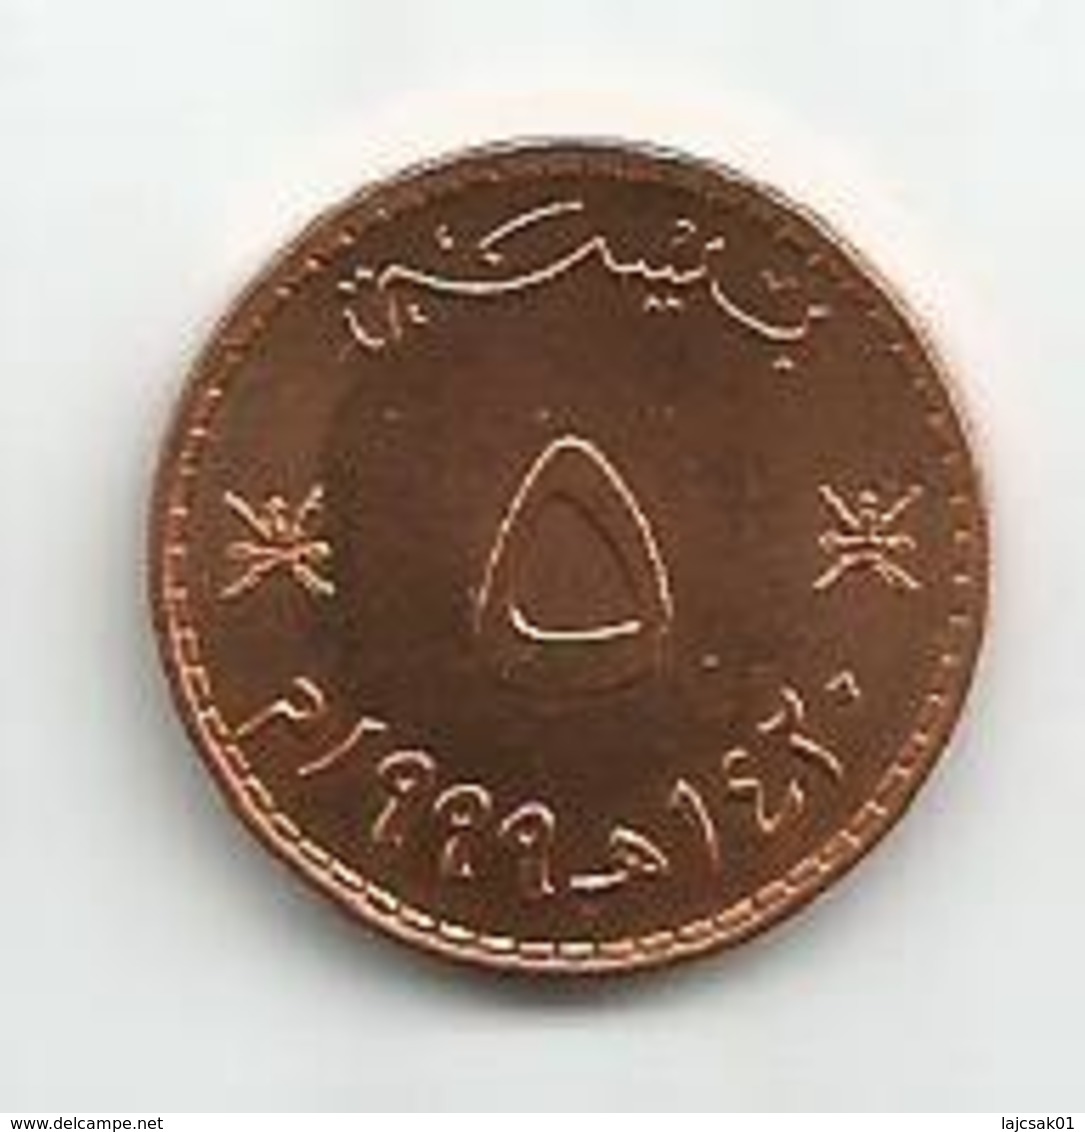 Oman 5 Baisa 1999. - Oman